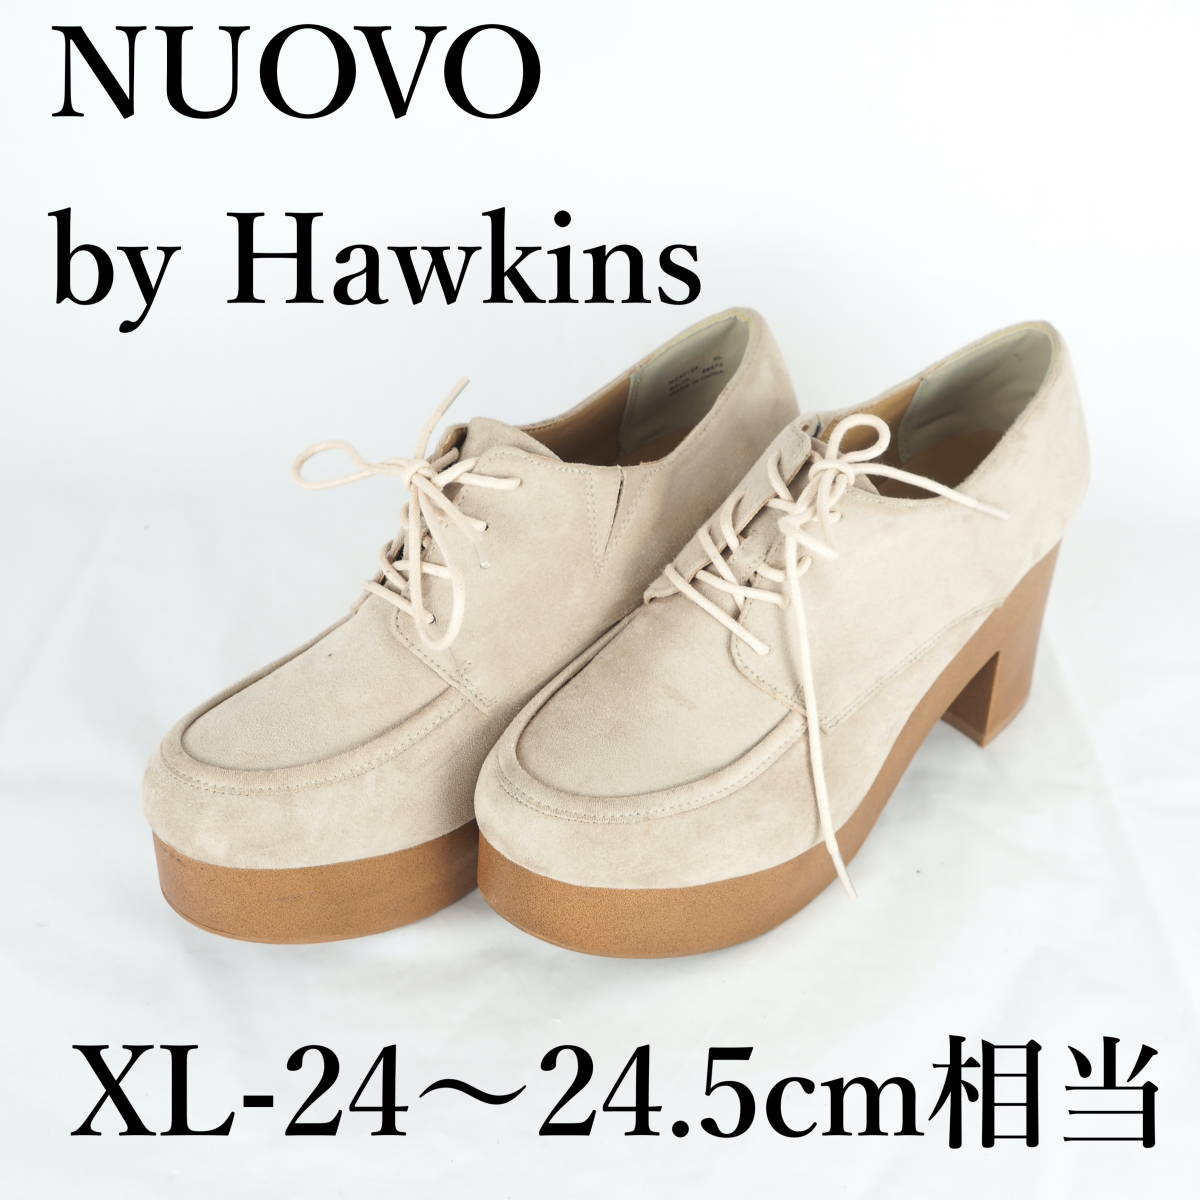 LK9428*NUOVO by Hawkins*no-vo Hawkins * женский толщина низ обувь *XL-24~24.5cm соответствует * оттенок бежевого 